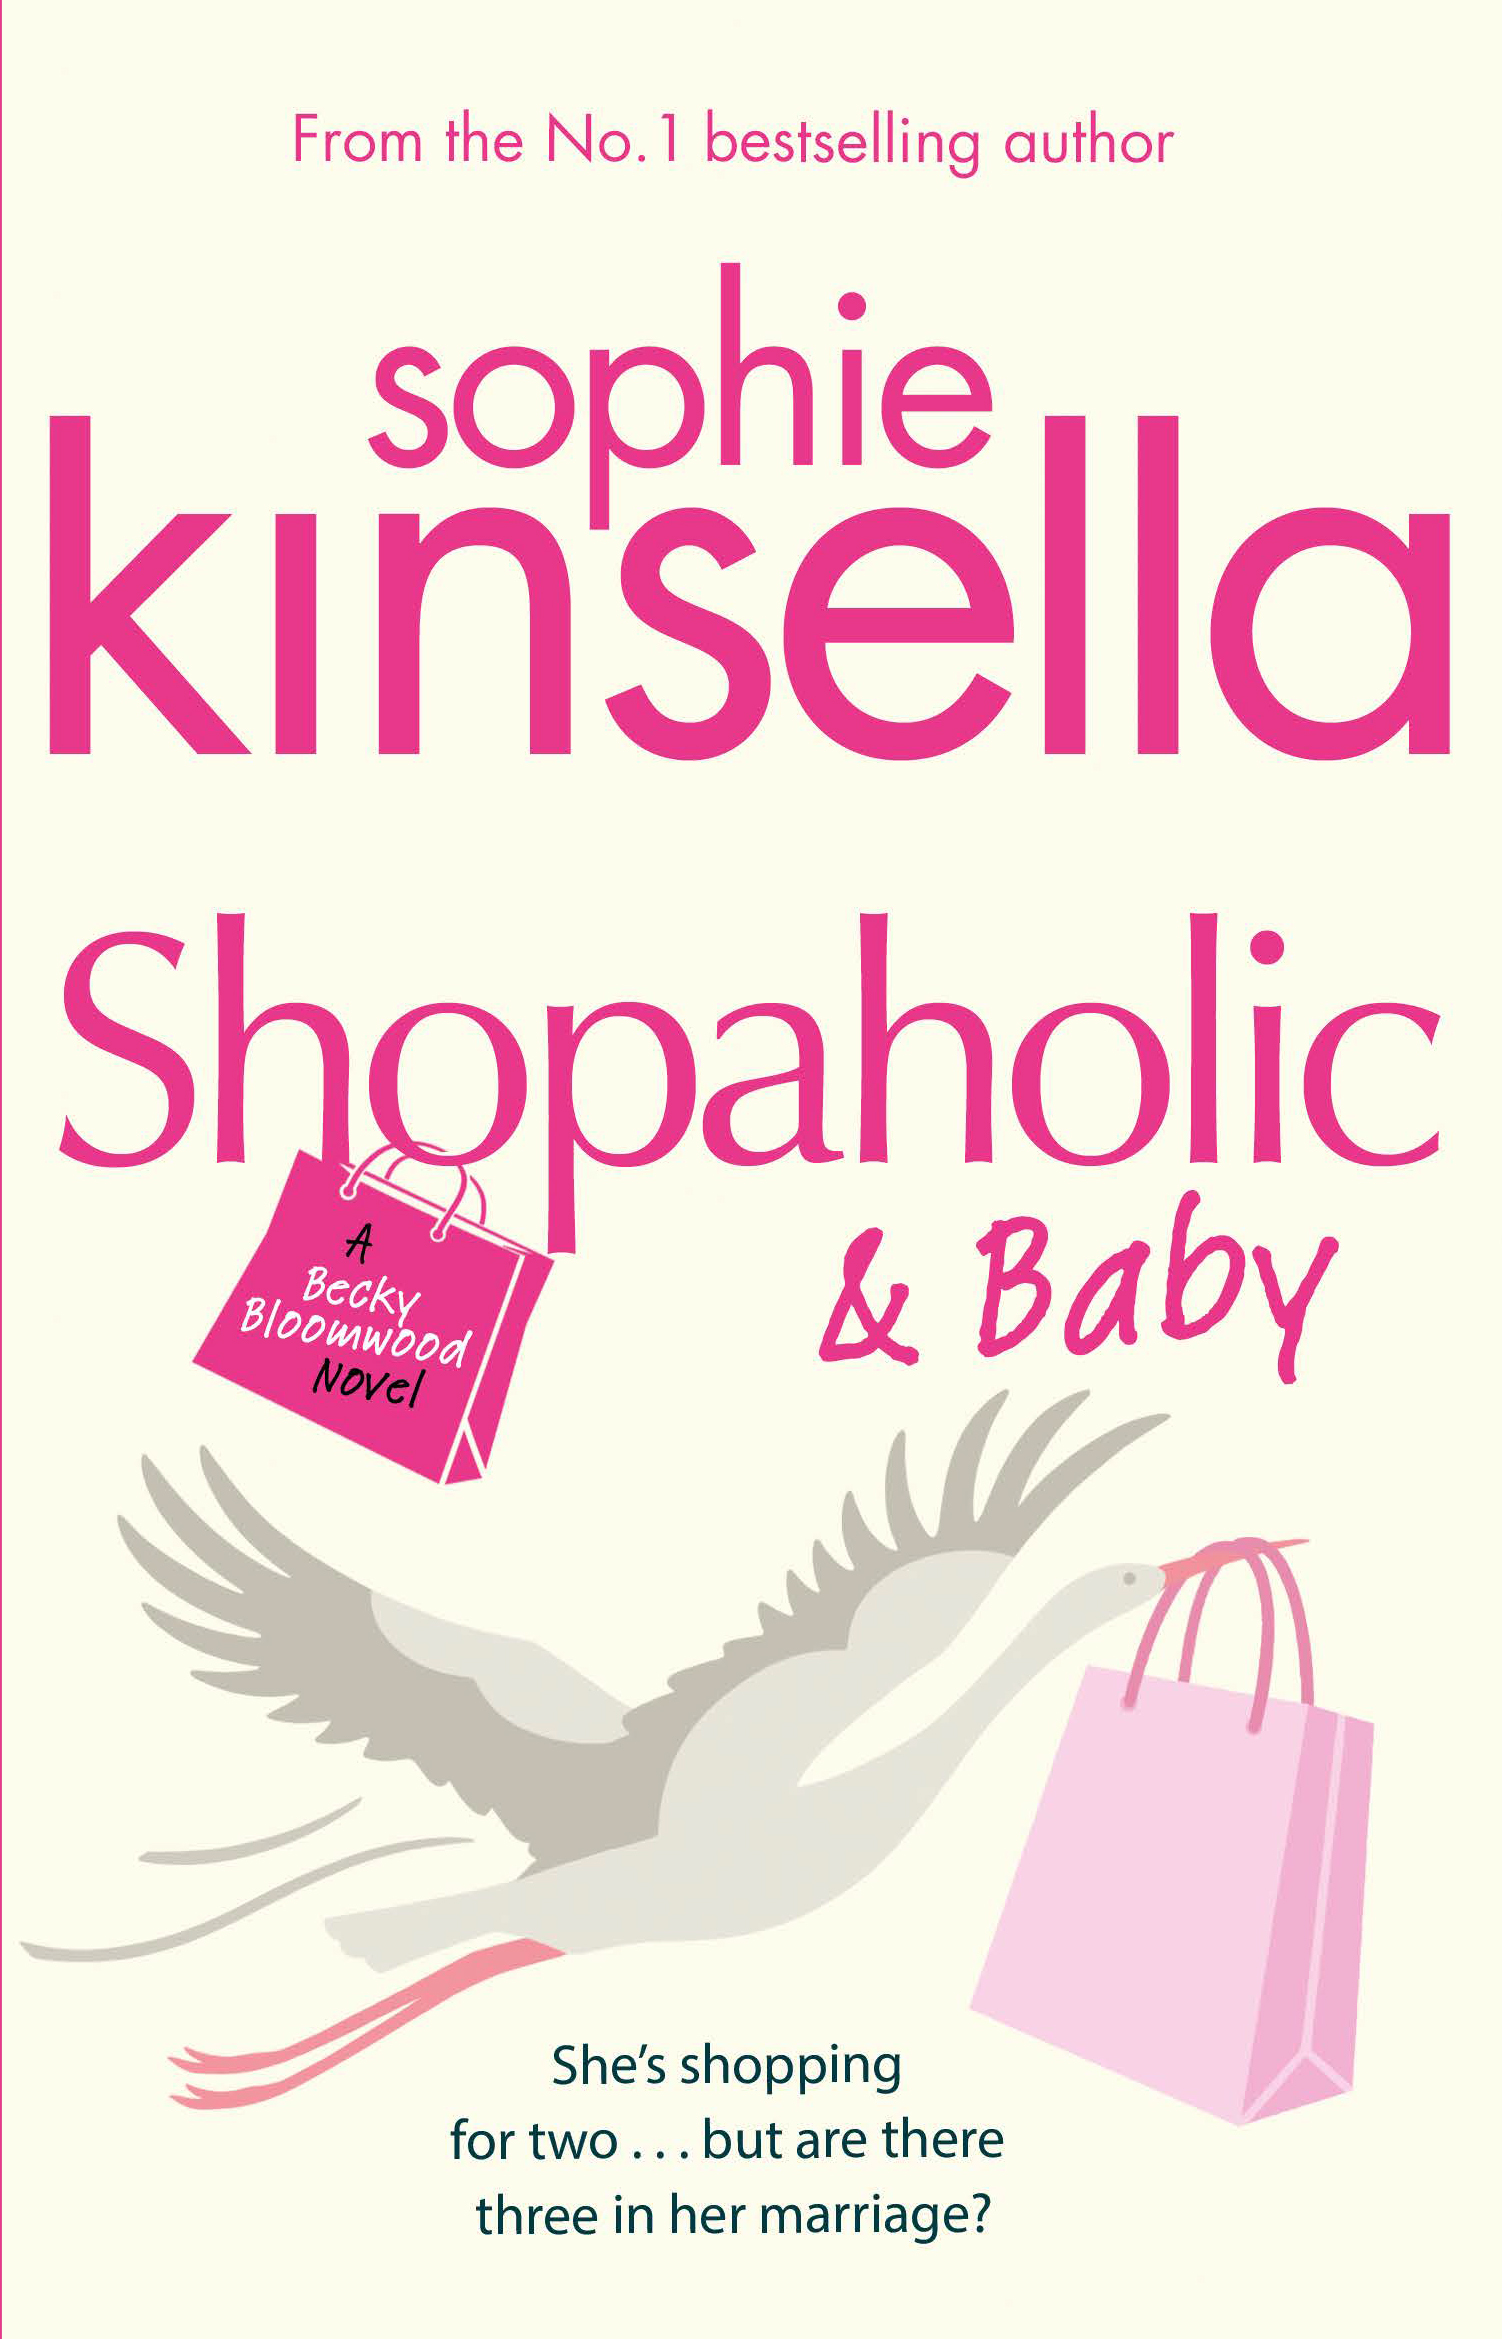 5. Shopaholic & Baby